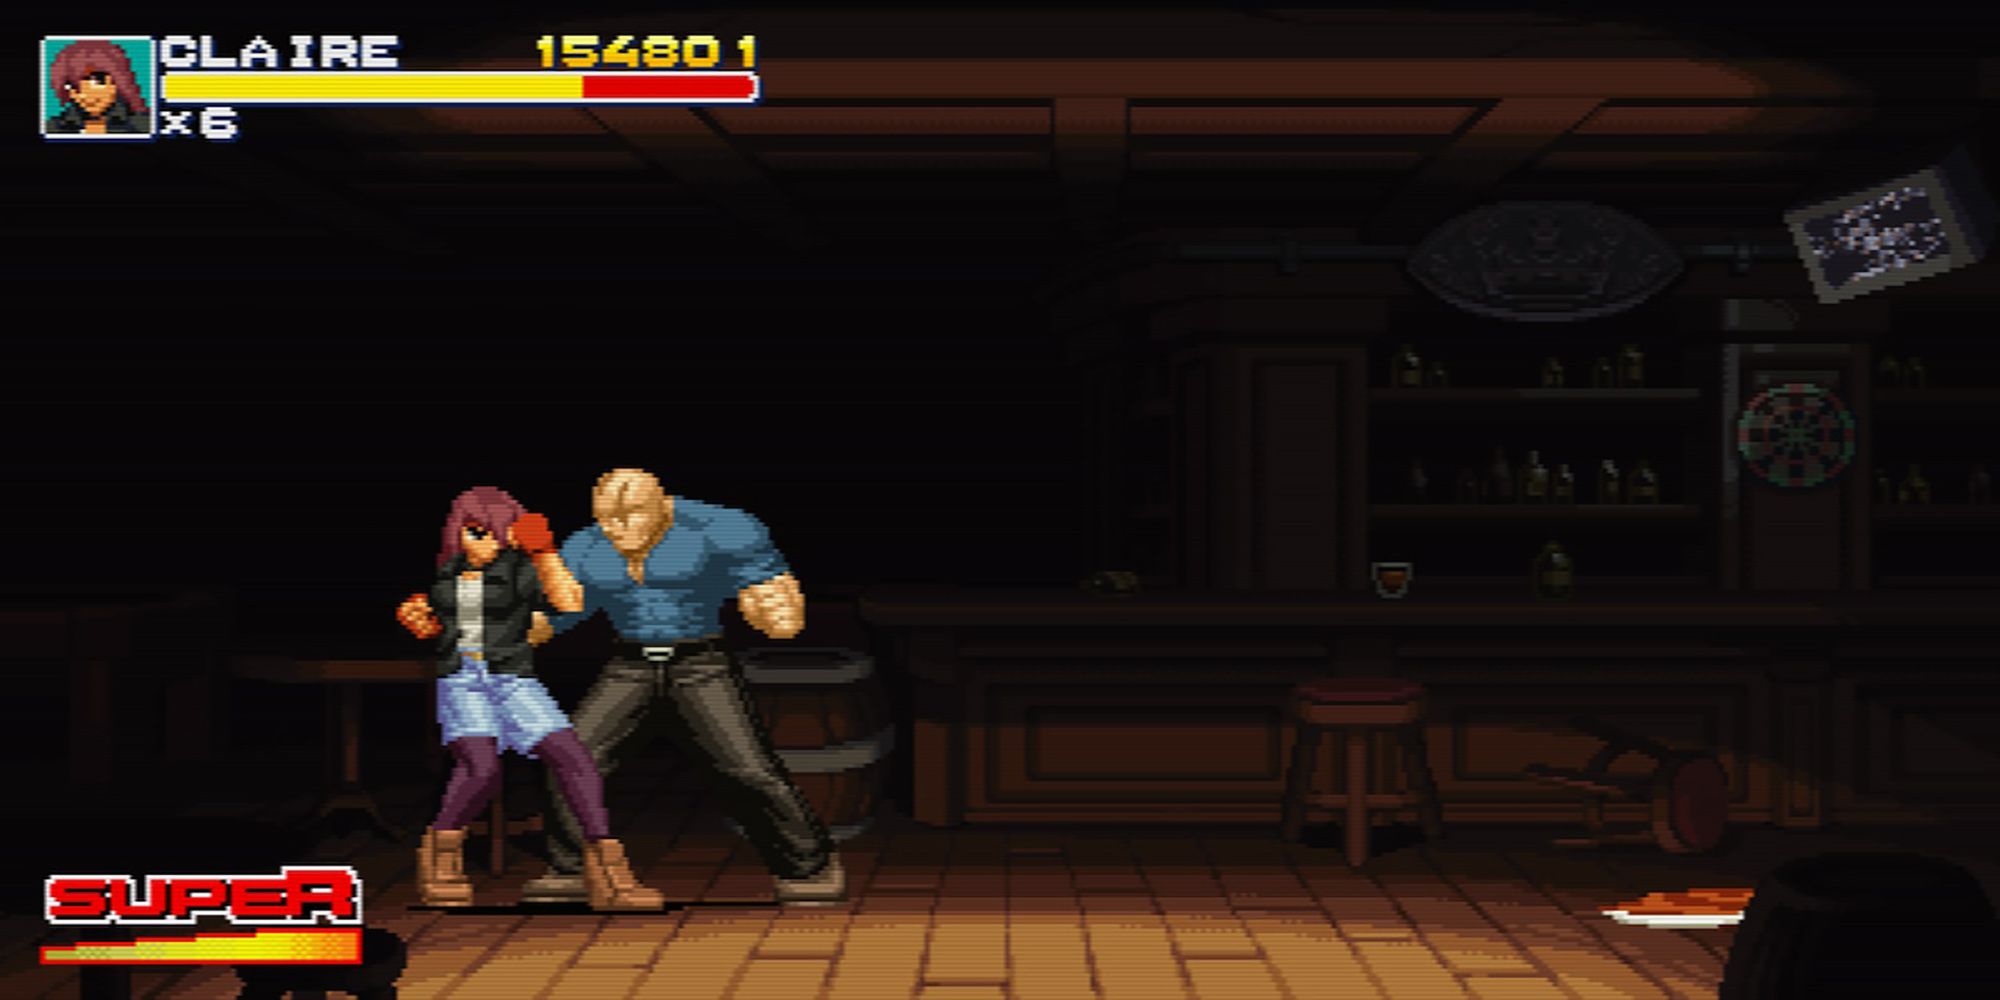 Claire guards against Big Frank in a bar brawl in Final Vendetta.